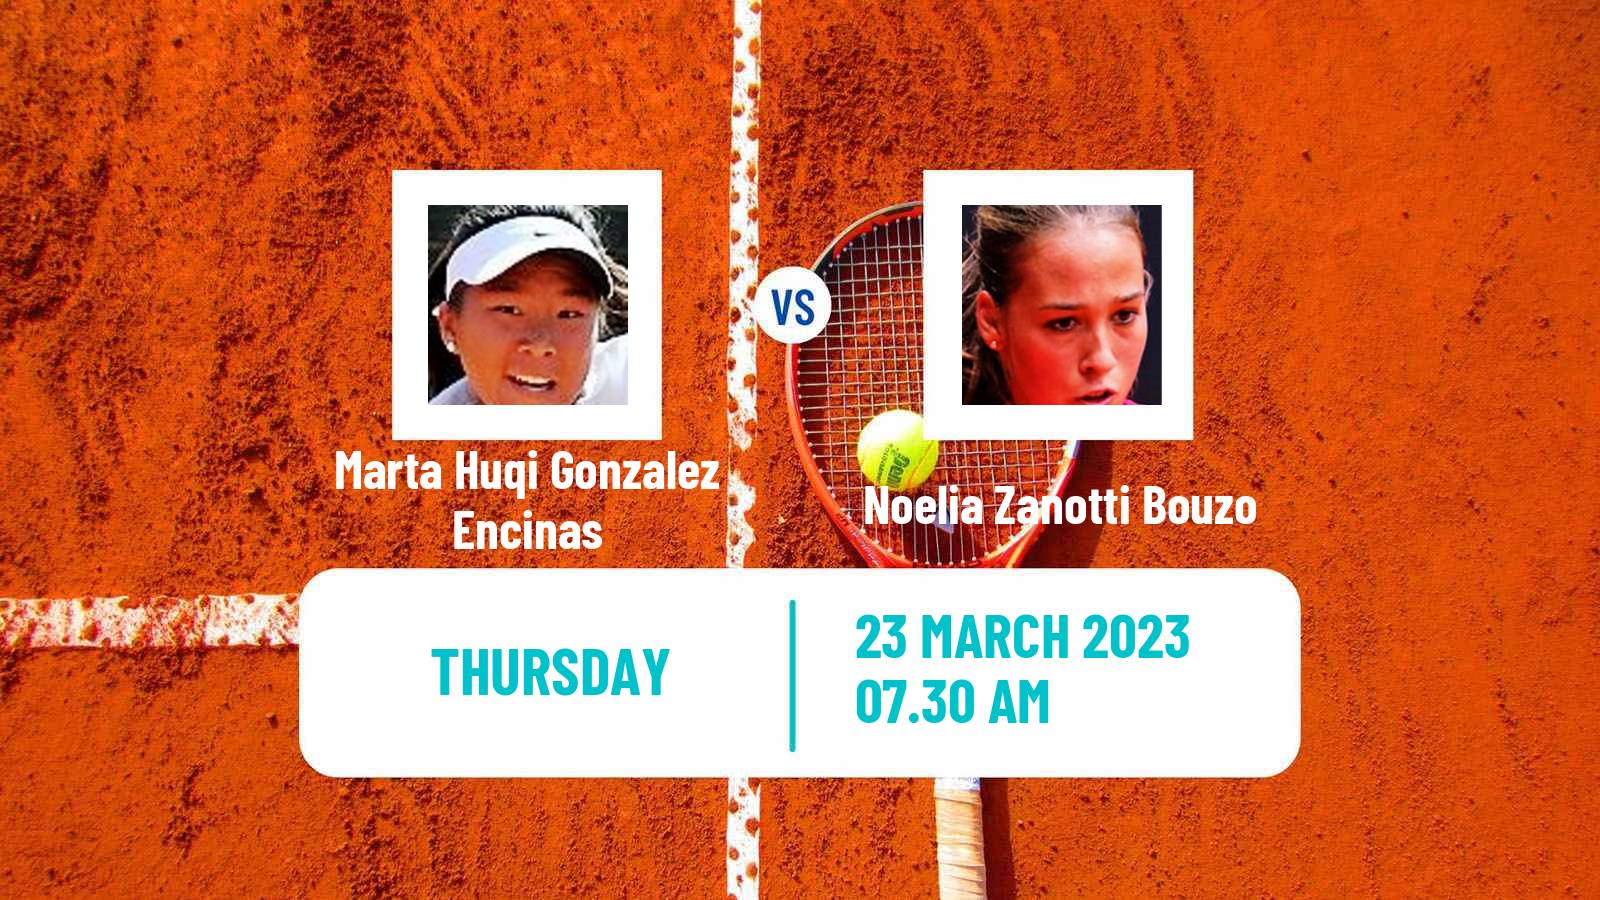 Tennis ITF Tournaments Marta Huqi Gonzalez Encinas - Noelia Zanotti Bouzo